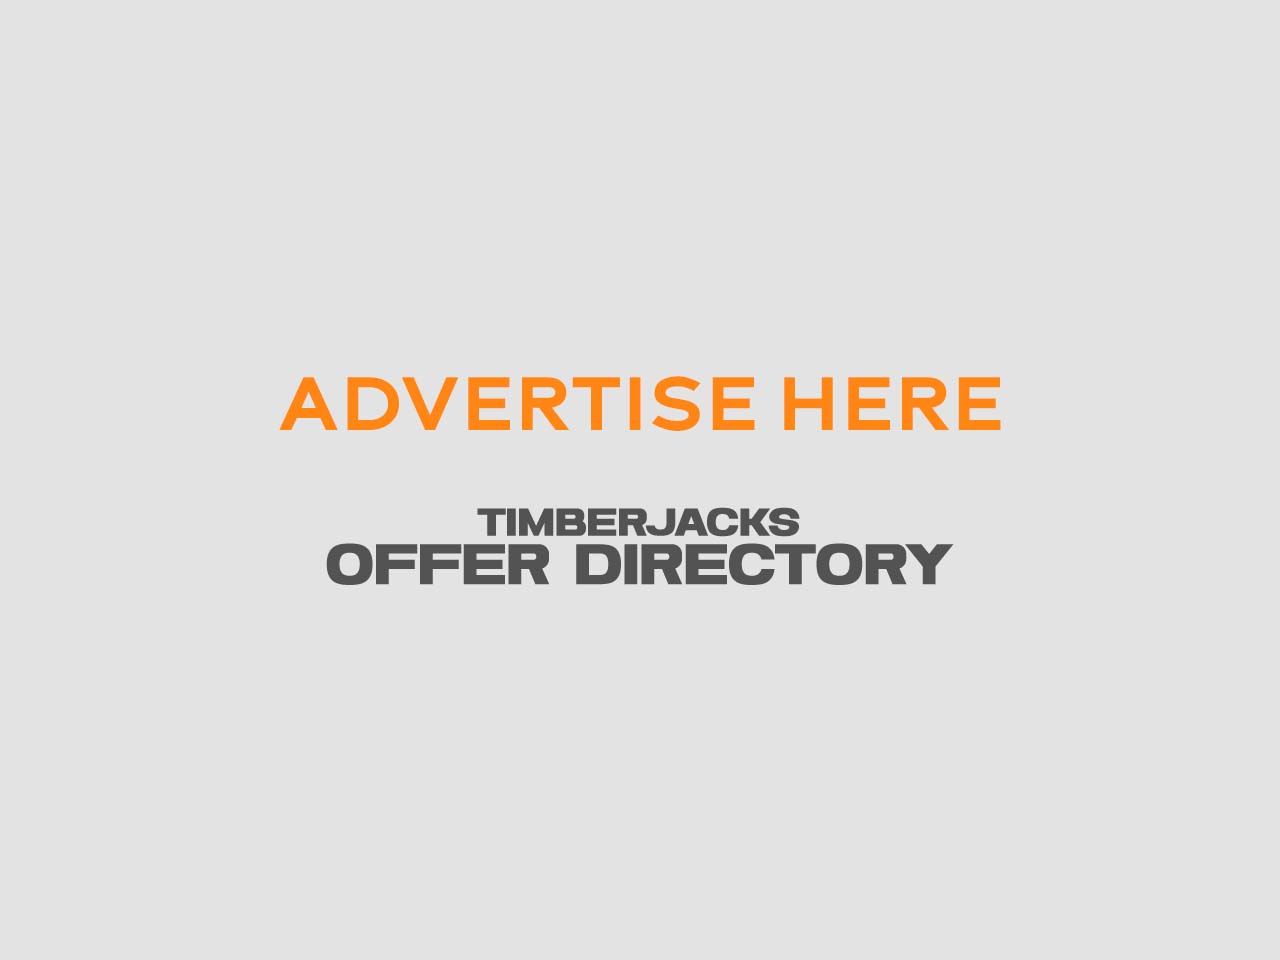 tj-offer-ad-here-1.jpg